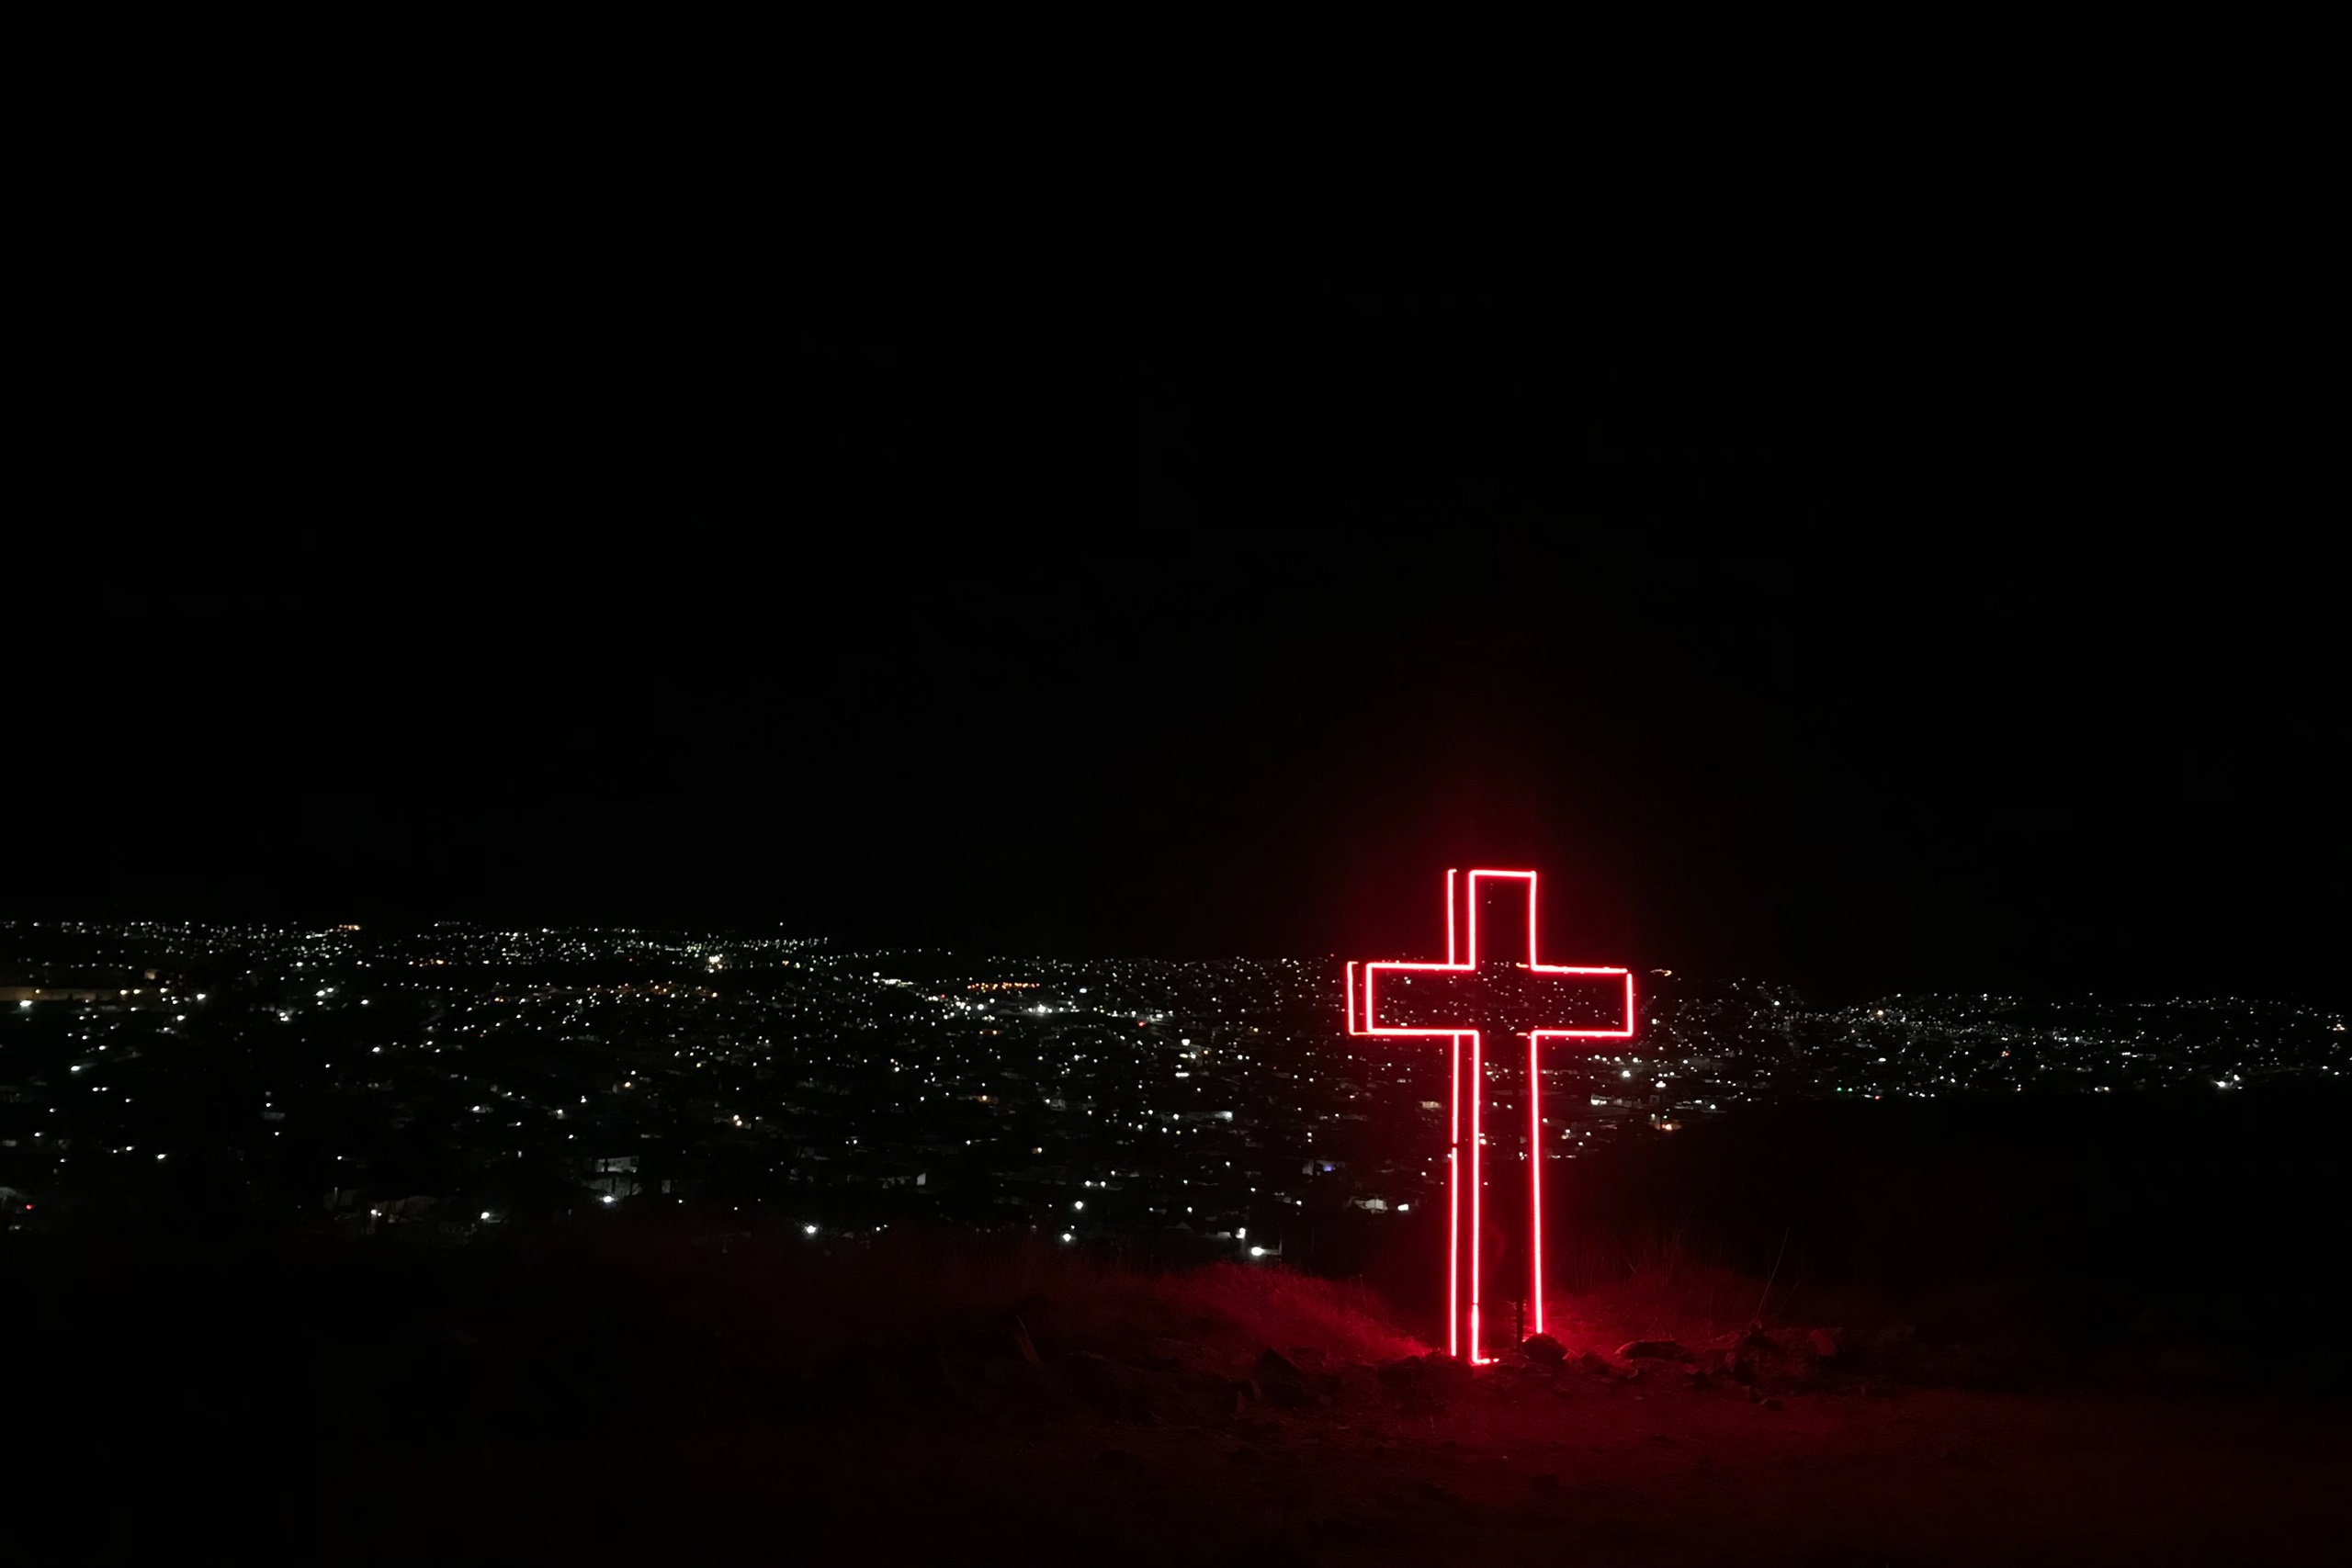 Cross lit up at night